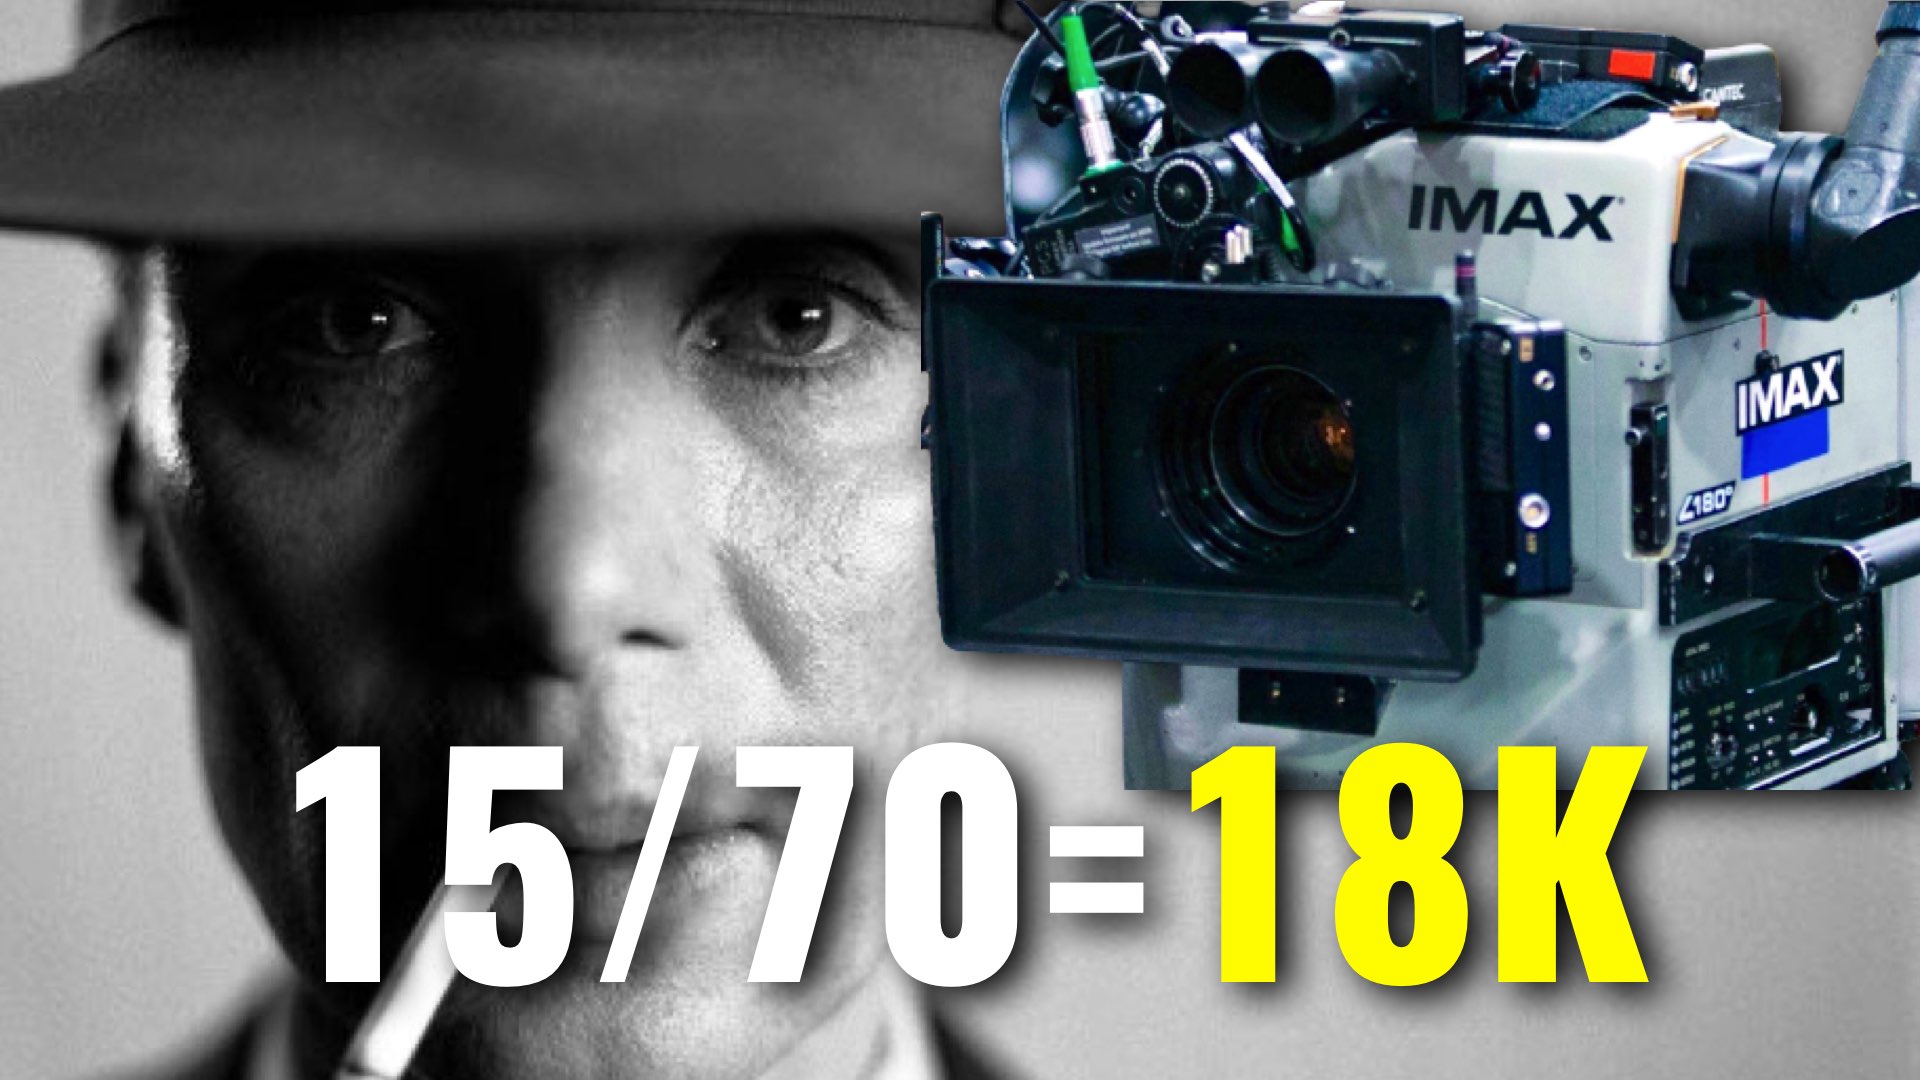 Nolan's Oppenheimer, IMAX 15/70, and 18K Resolution - Y.M.Cinema